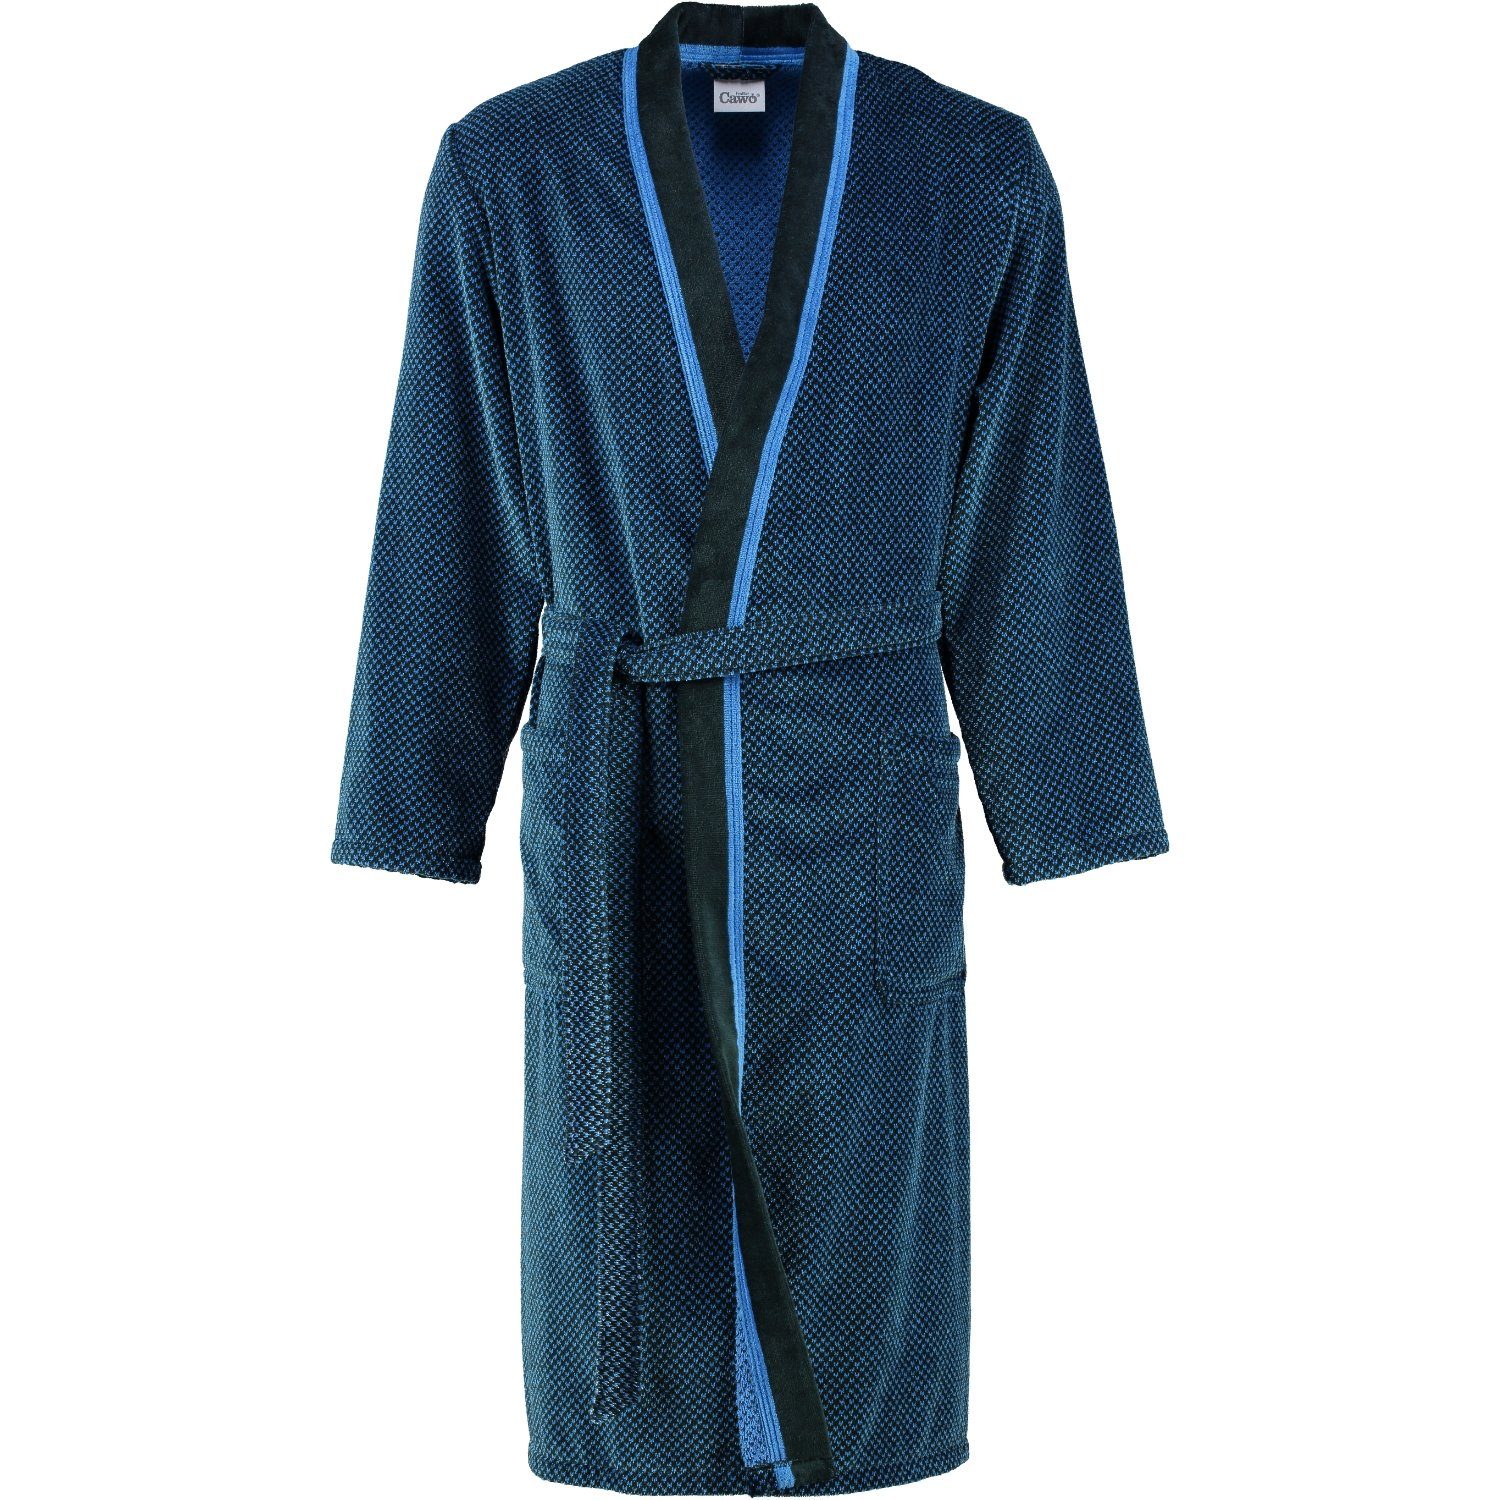 Cawö Herrenbademantel 4839, Langform, Baumwolle, Kimonoform, Gürtel, Kimono Form 19 blau schwarz